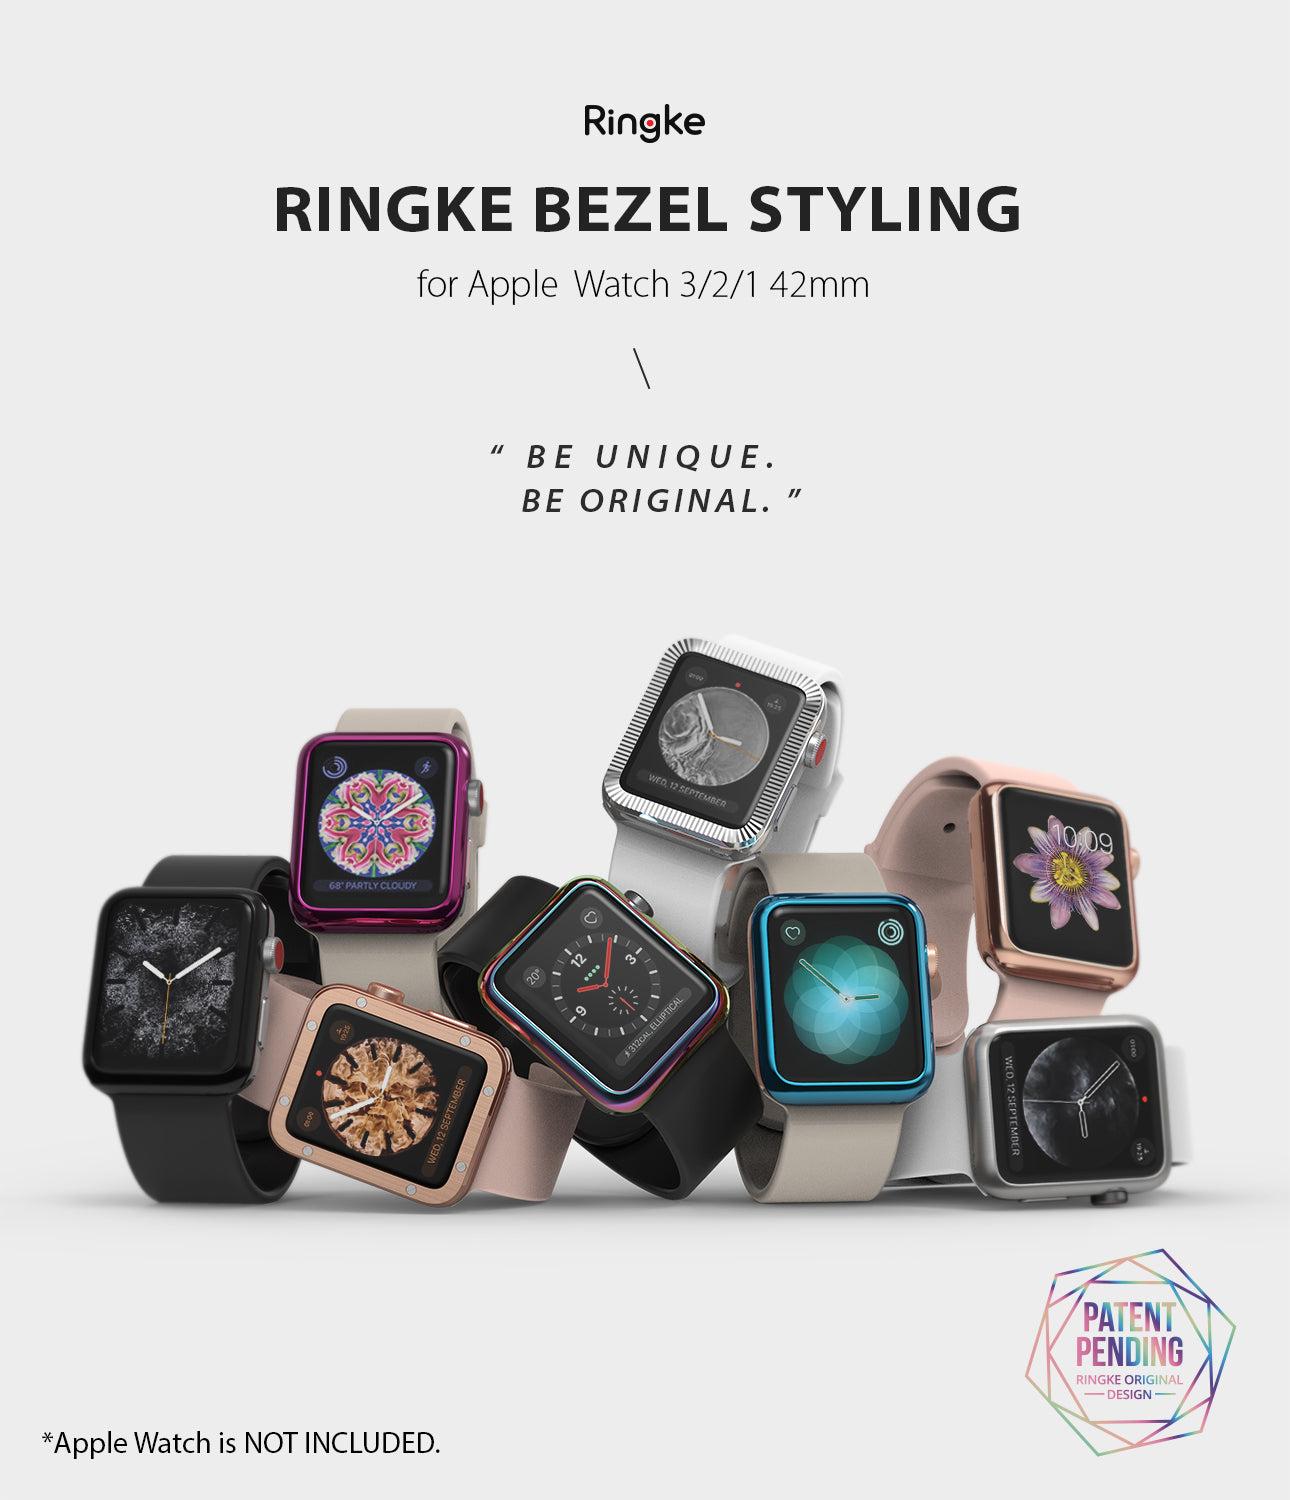 apple watch 3 2 1 42mm case ringke bezel styling stainless steel frame cover 42-08